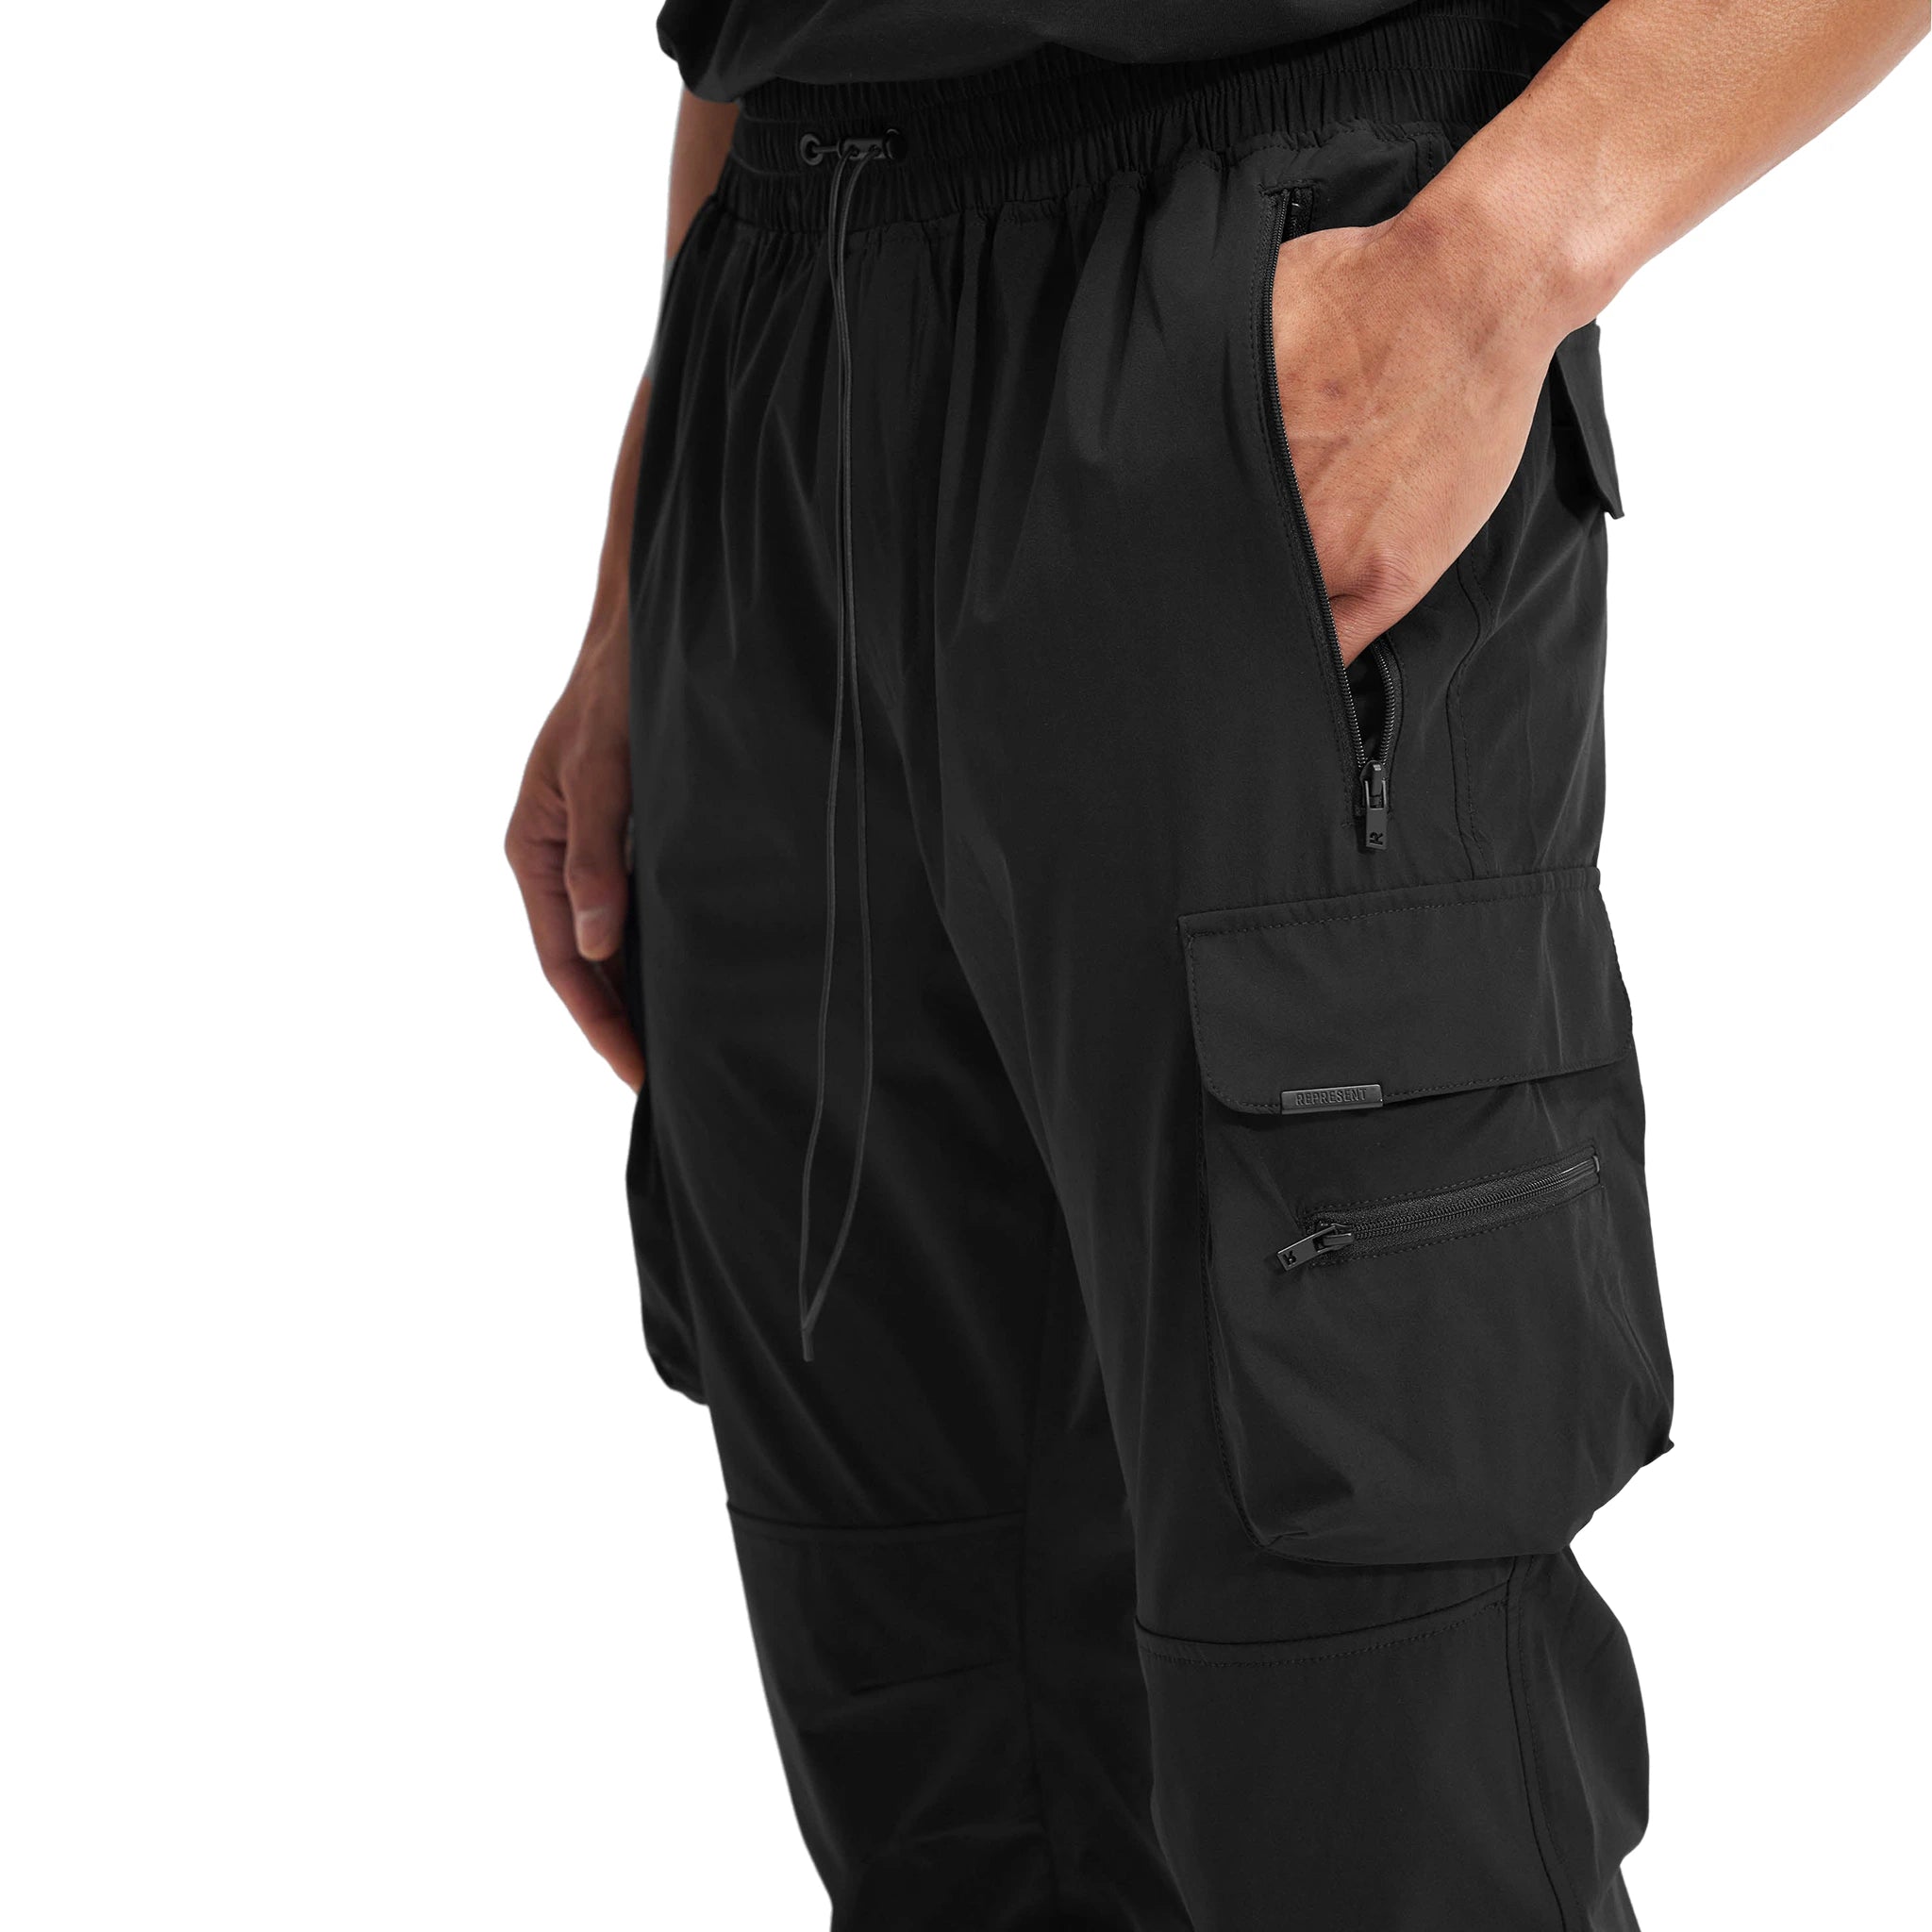 Pocket view of Represent 247 Black Cargo Pants